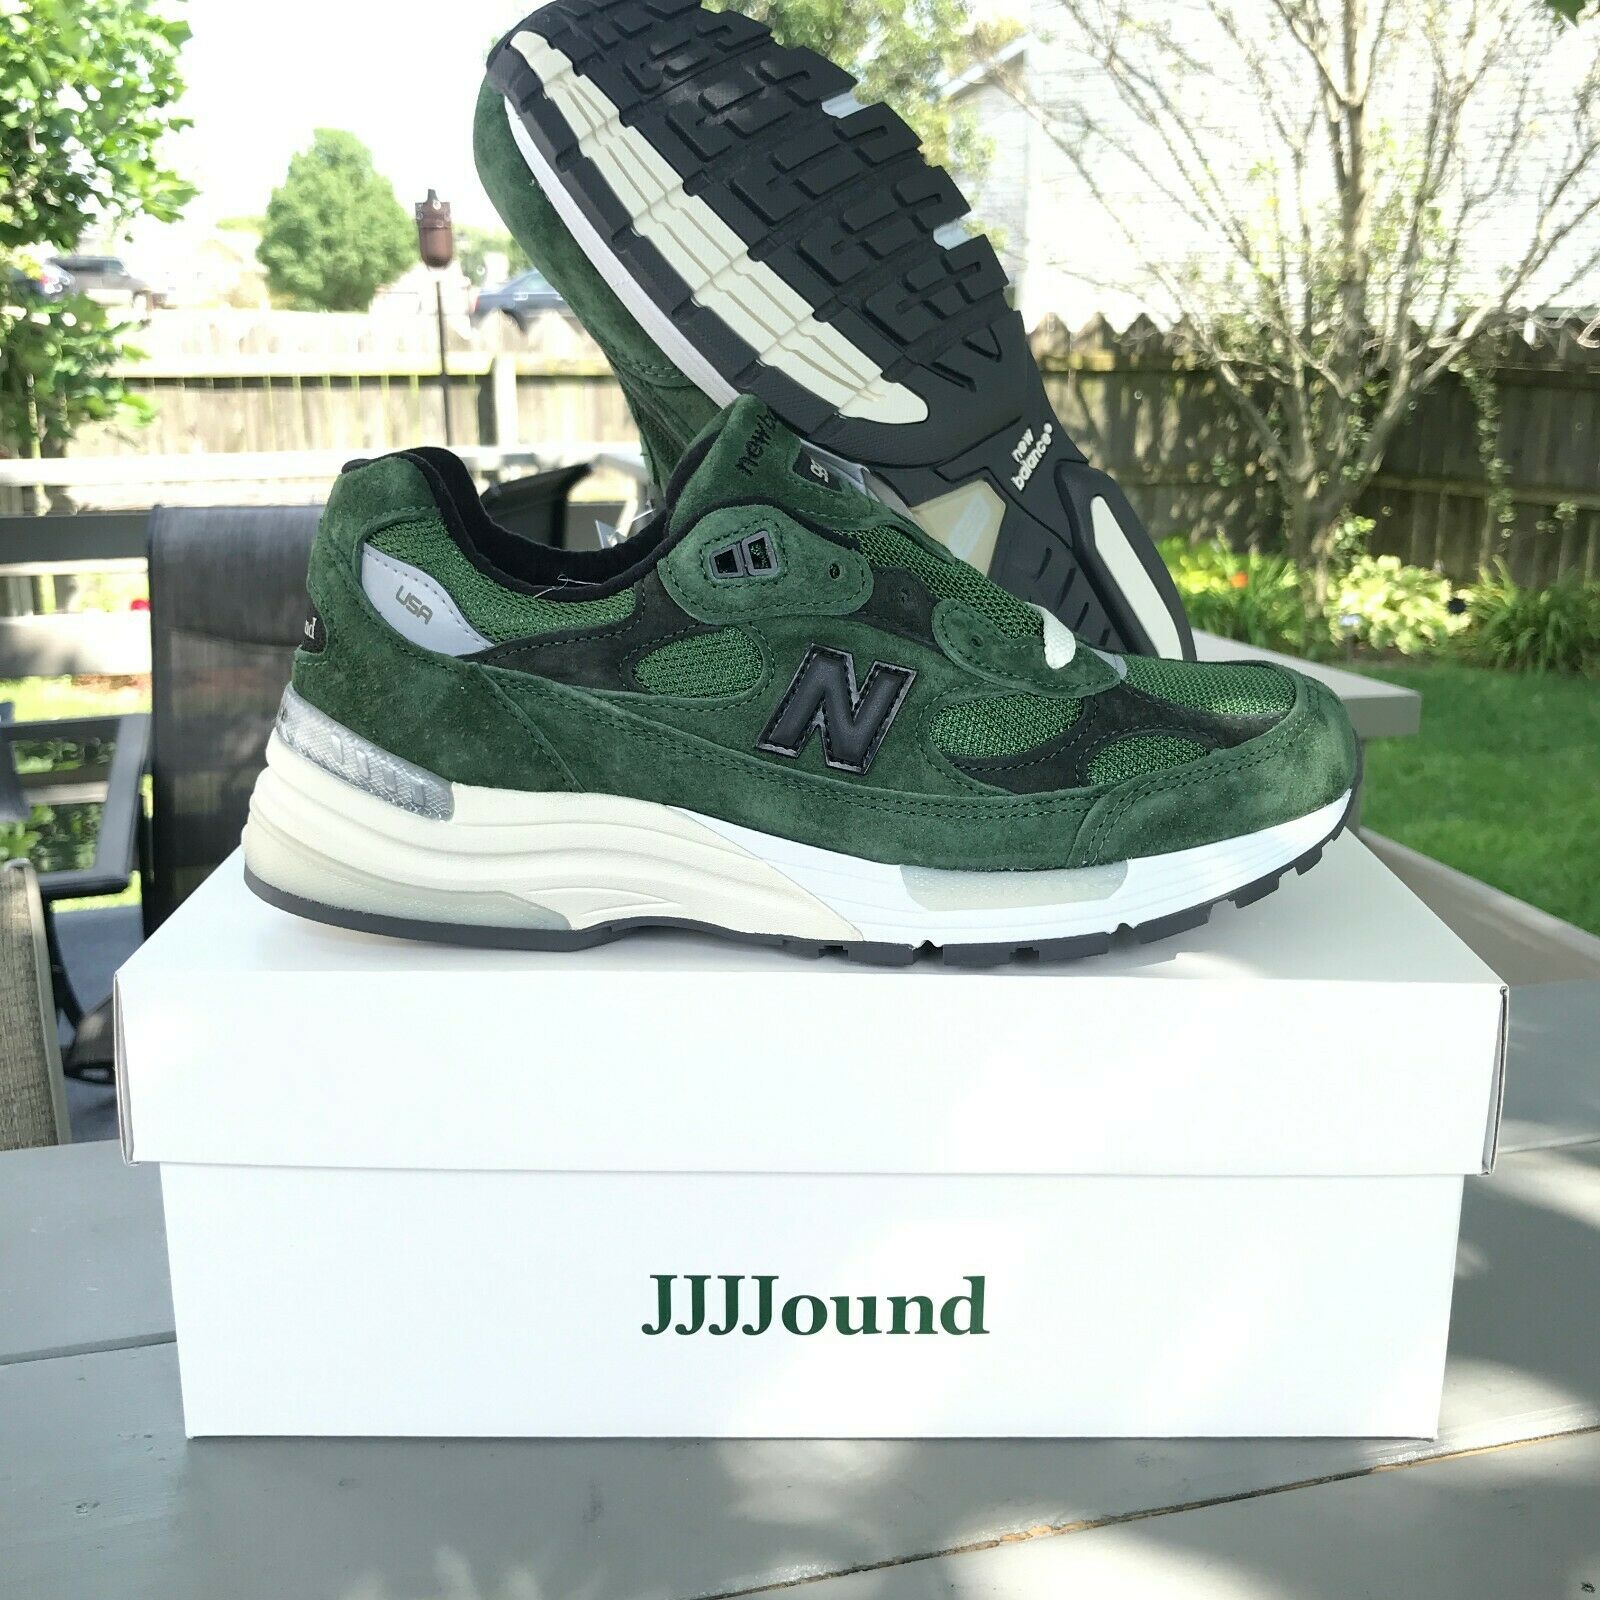 New Balance 992 JJJJound Green